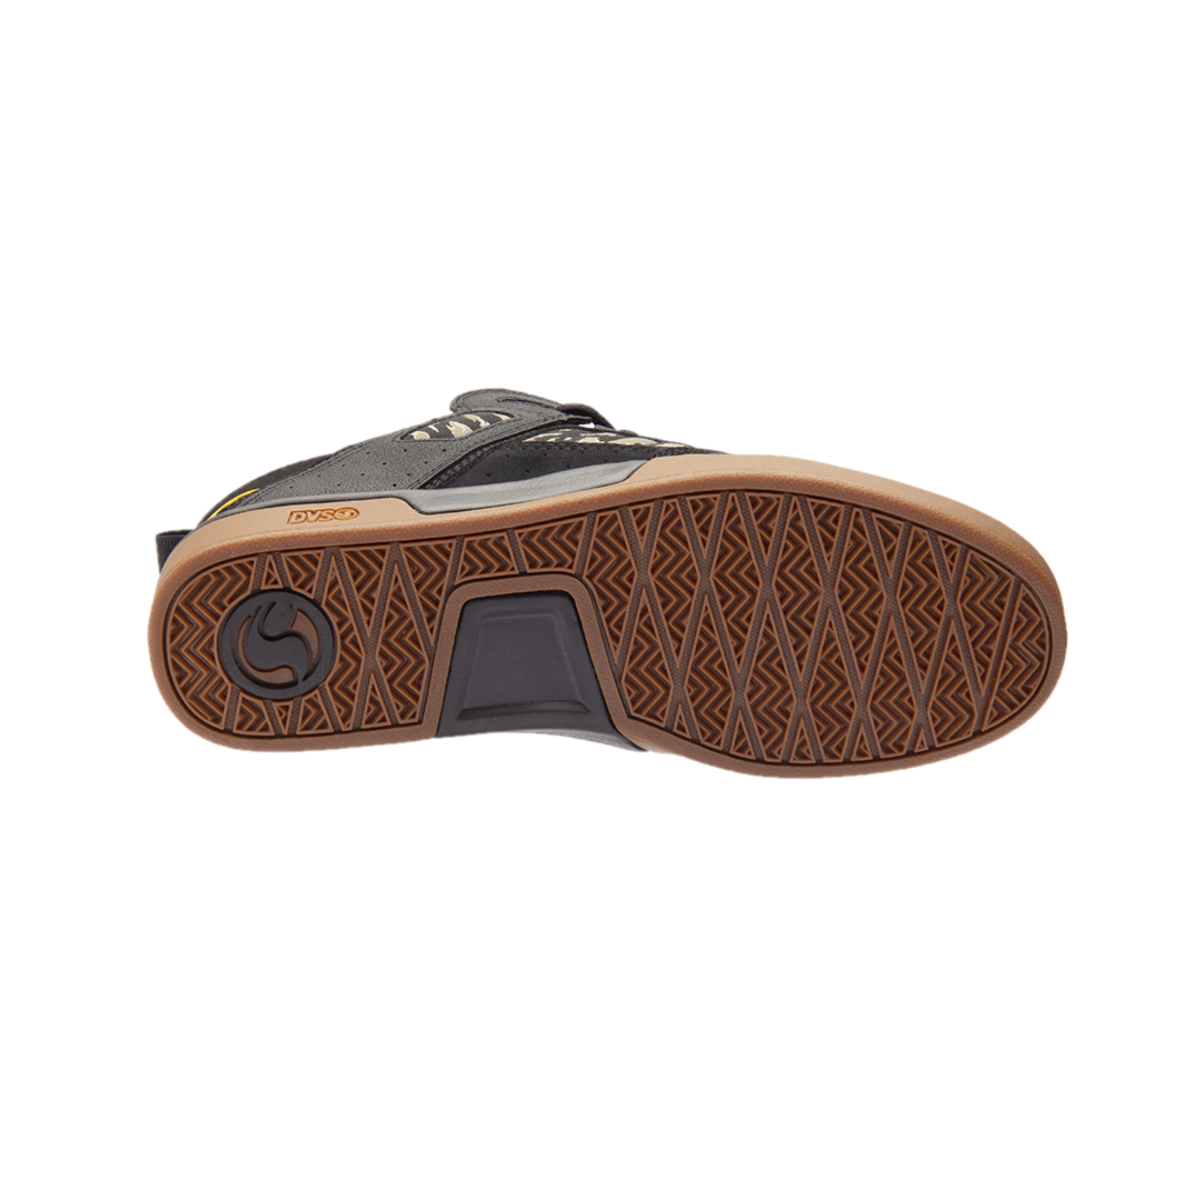 DVS F0000323011 COMANCHE 2.0+ MN'S (Medium) Black/Jungle/Camo Leather Skate Shoes